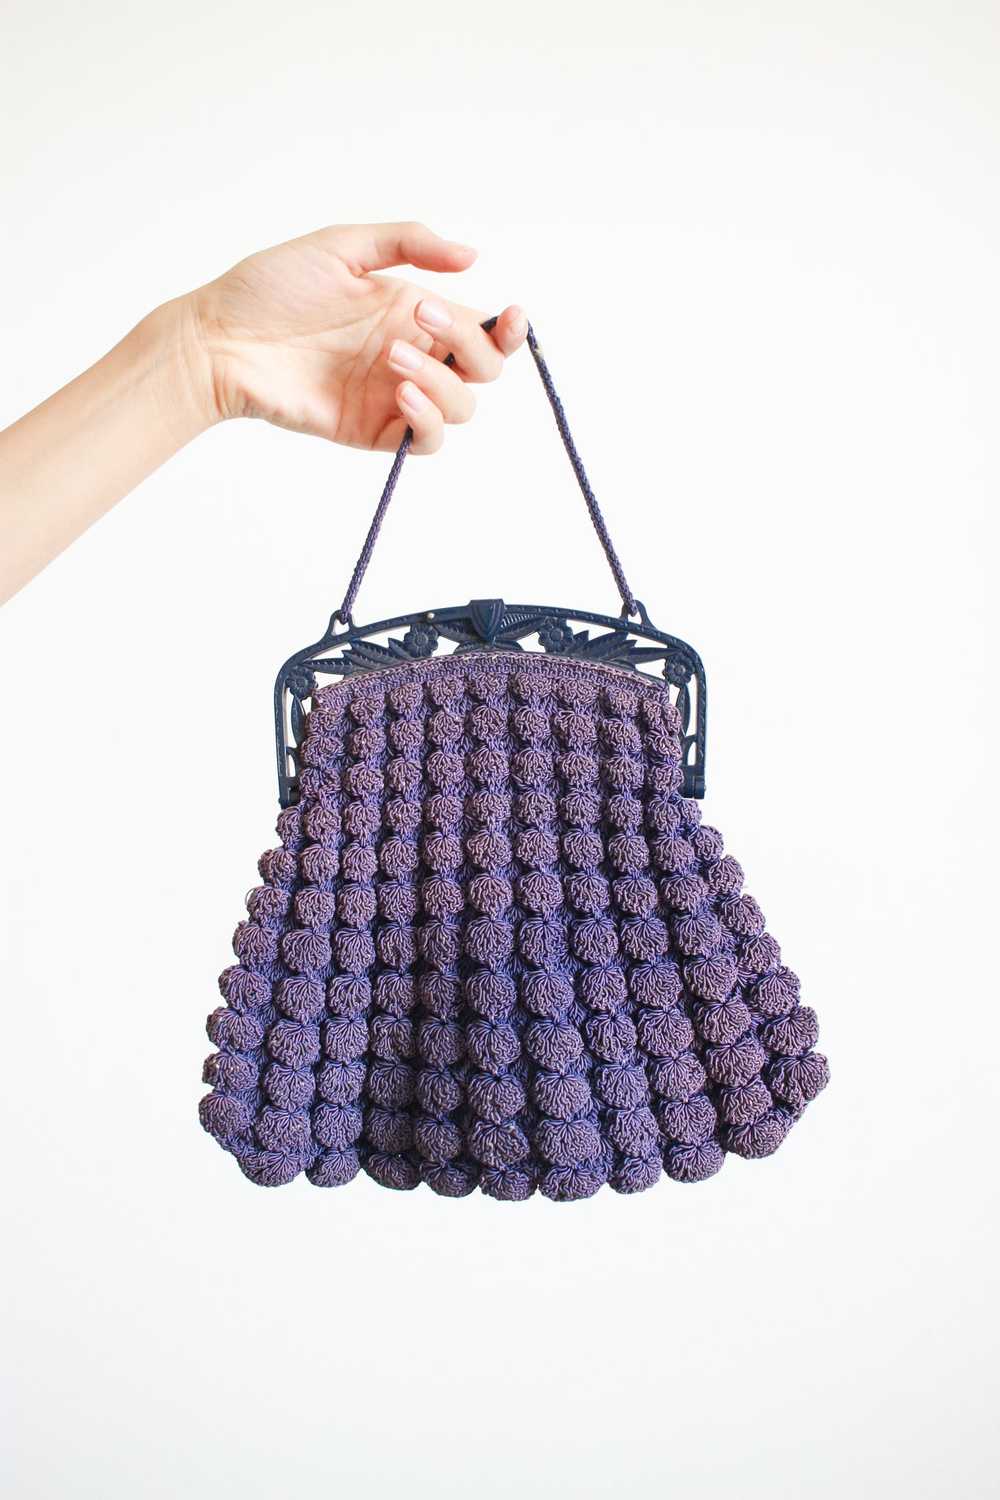 1930s Voilet Berry Knit Handbag - image 1